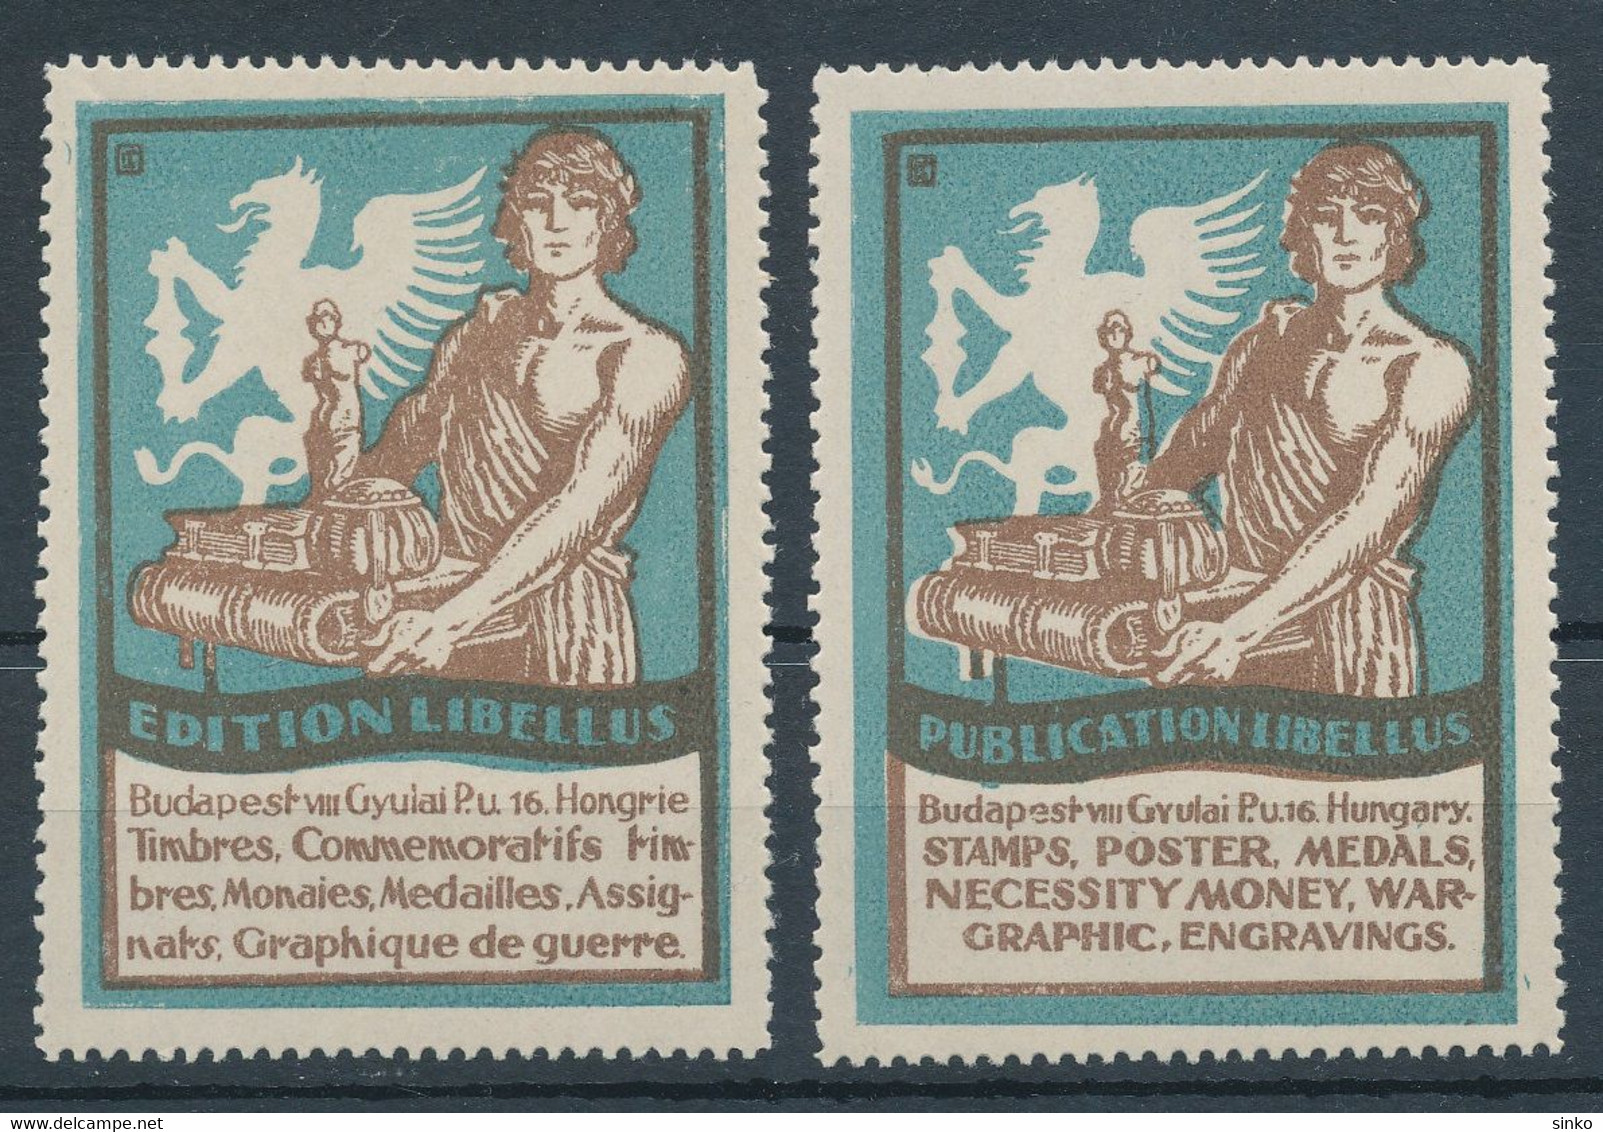 1929. Publication Libellus Advertisement Cinderella - Souvenirbögen